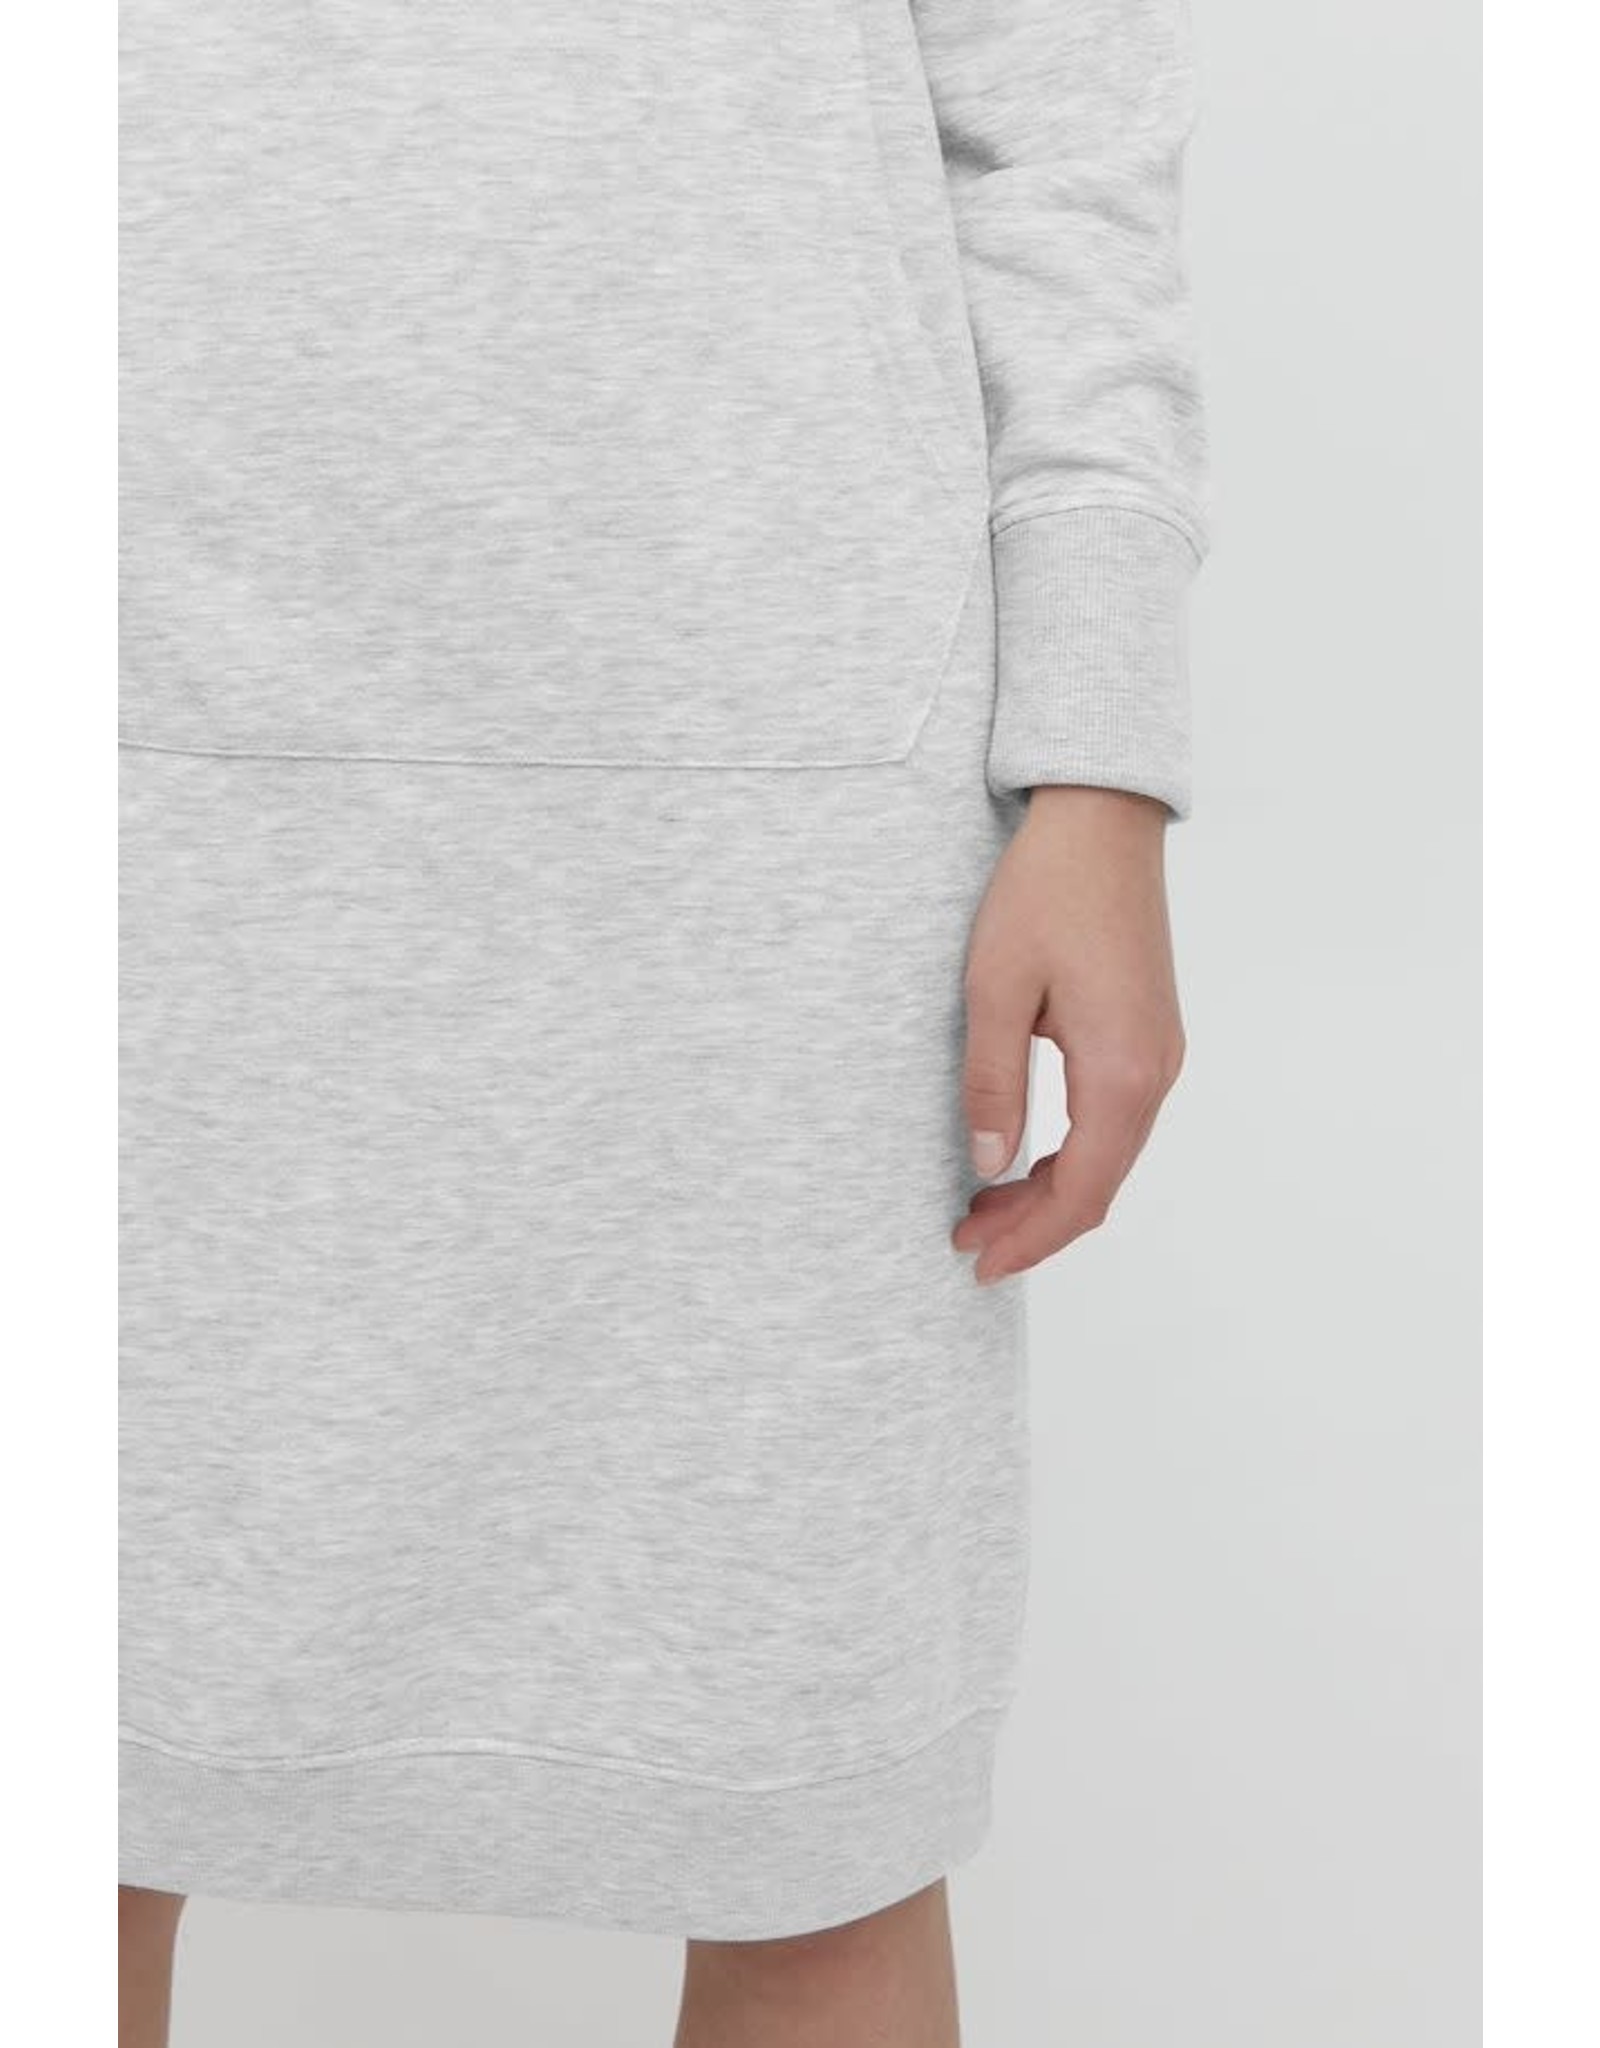 ICHI ICHI - Jondell hooded sweatshirt dress (grey)